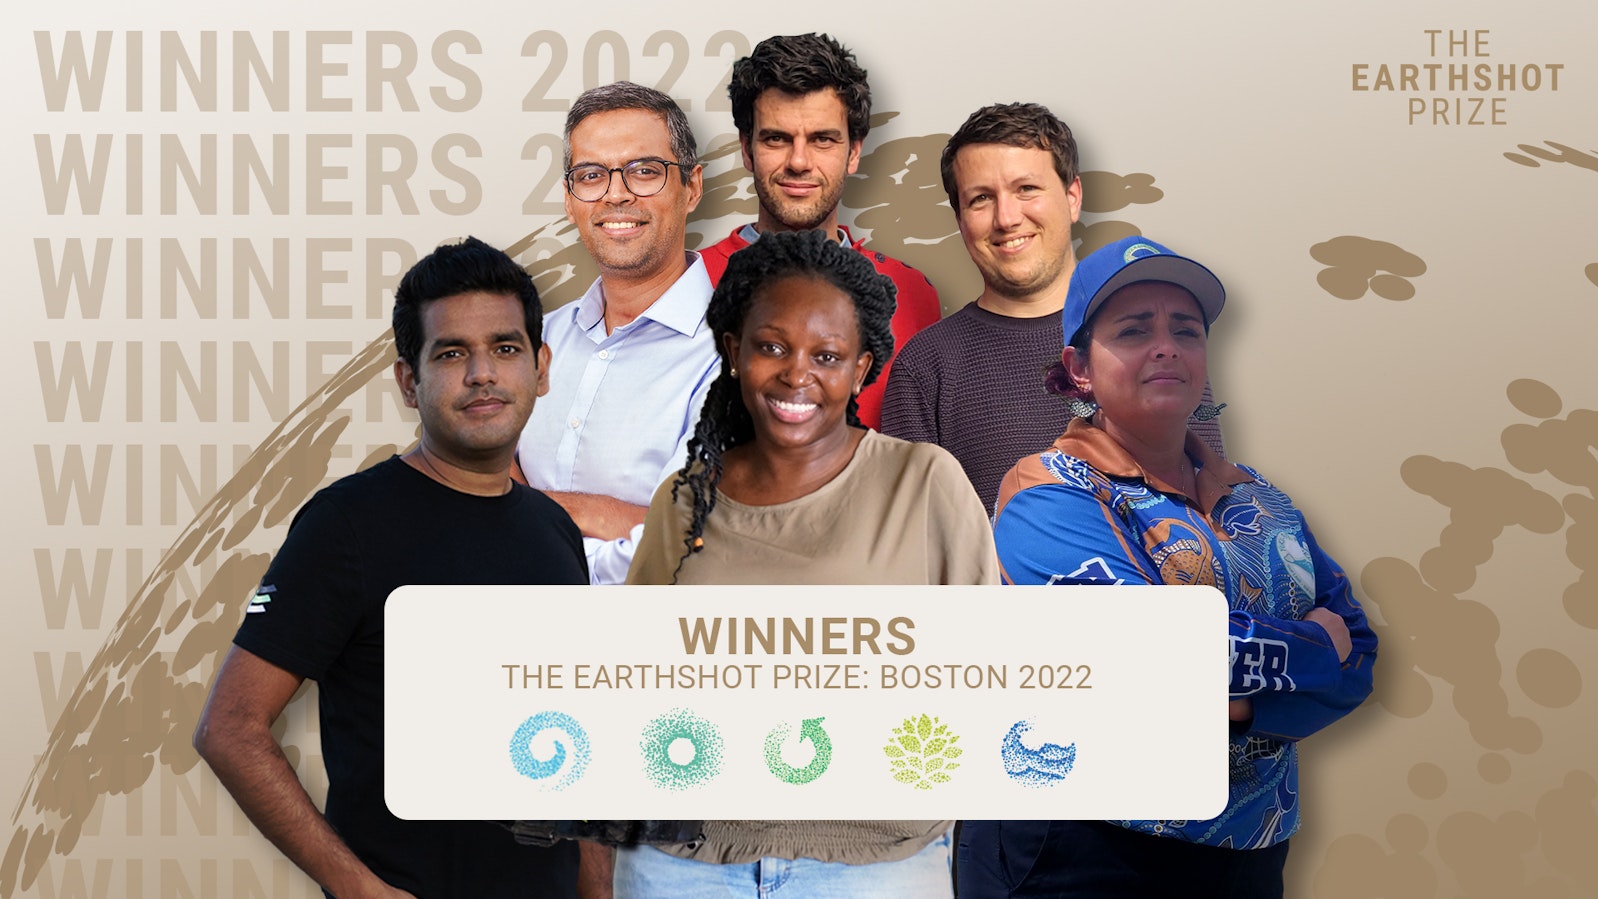 Winners of the 2022 Earthshot Prize.